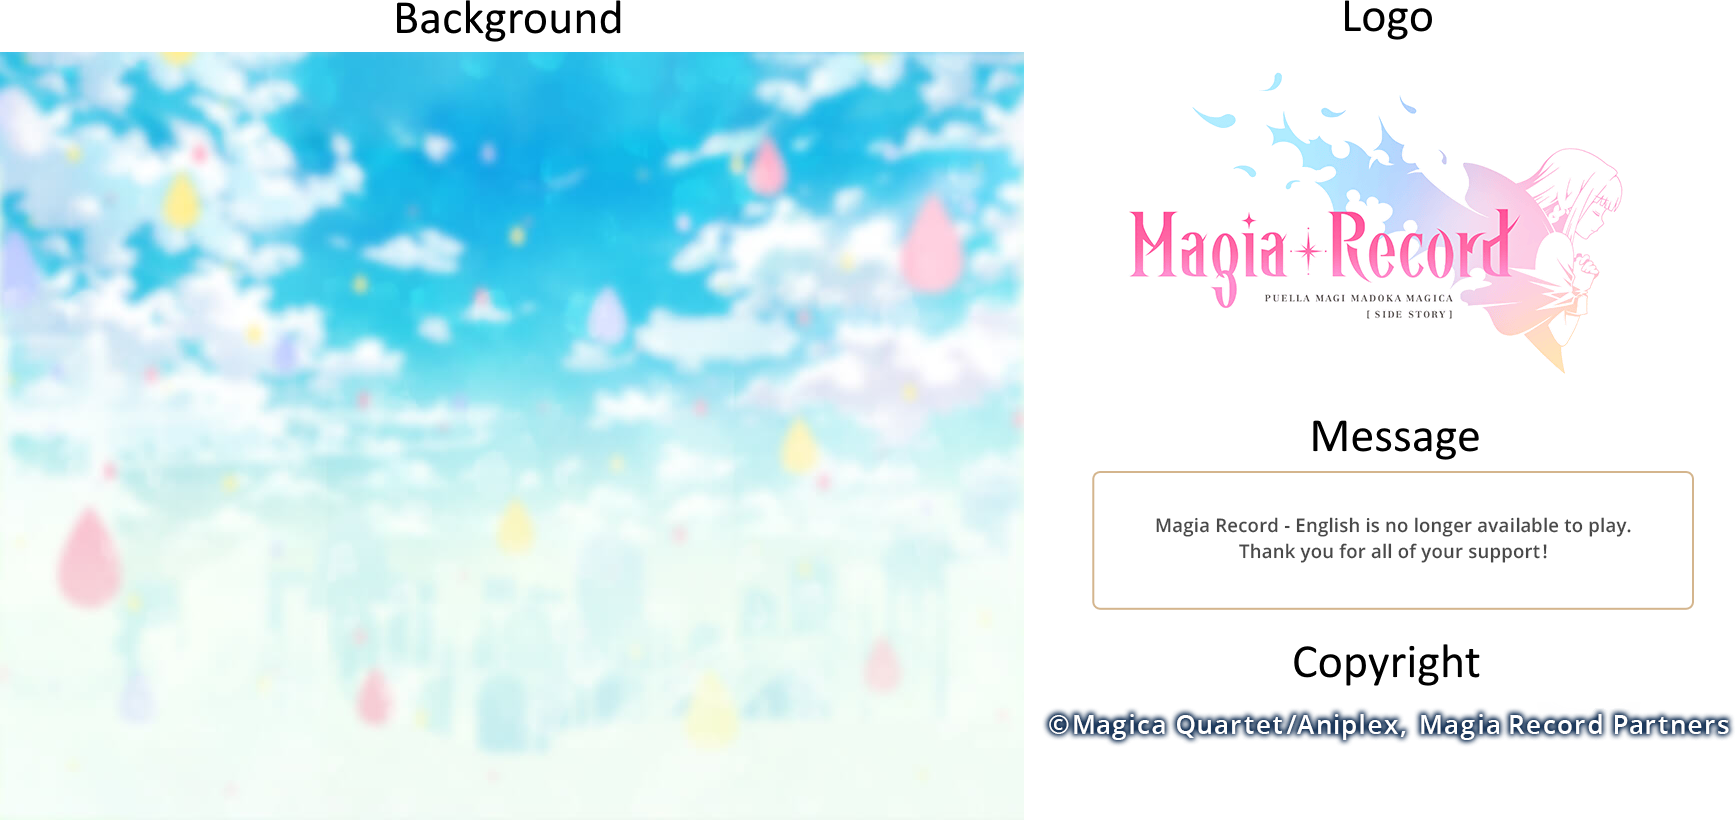 Puella Magi Madoka Magica Side Story: Magia Record - End of Service Message (NA)